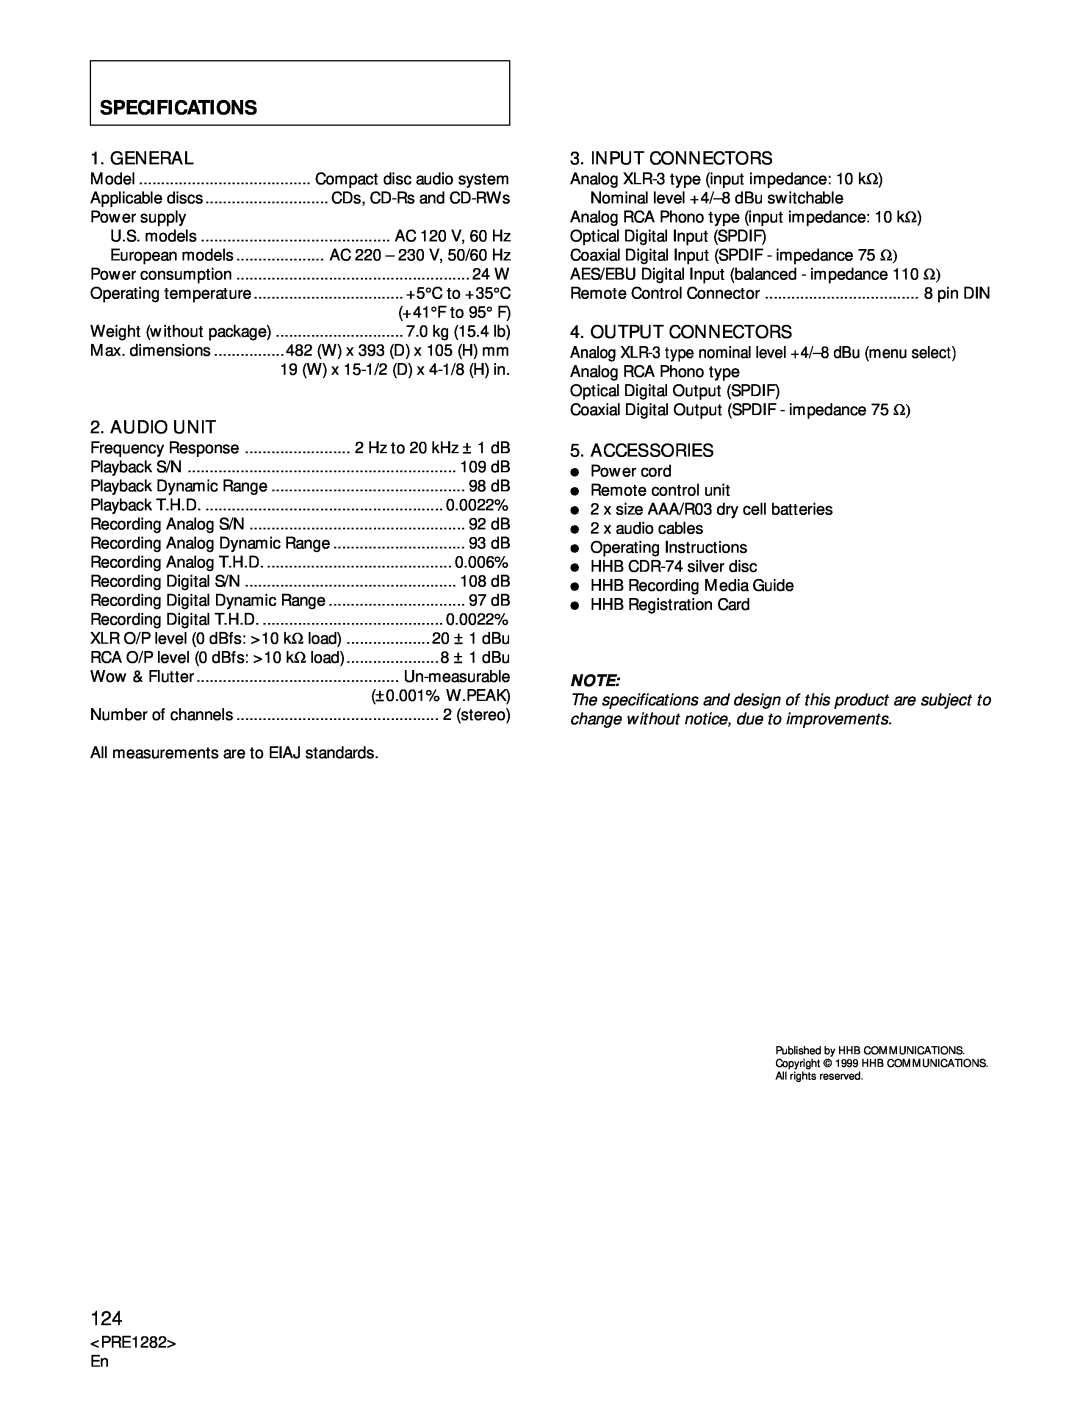 Americana Appliances CDR-850 manual Specifications, General, Audio Unit, Input Connectors, Output Connectors, Accessories 